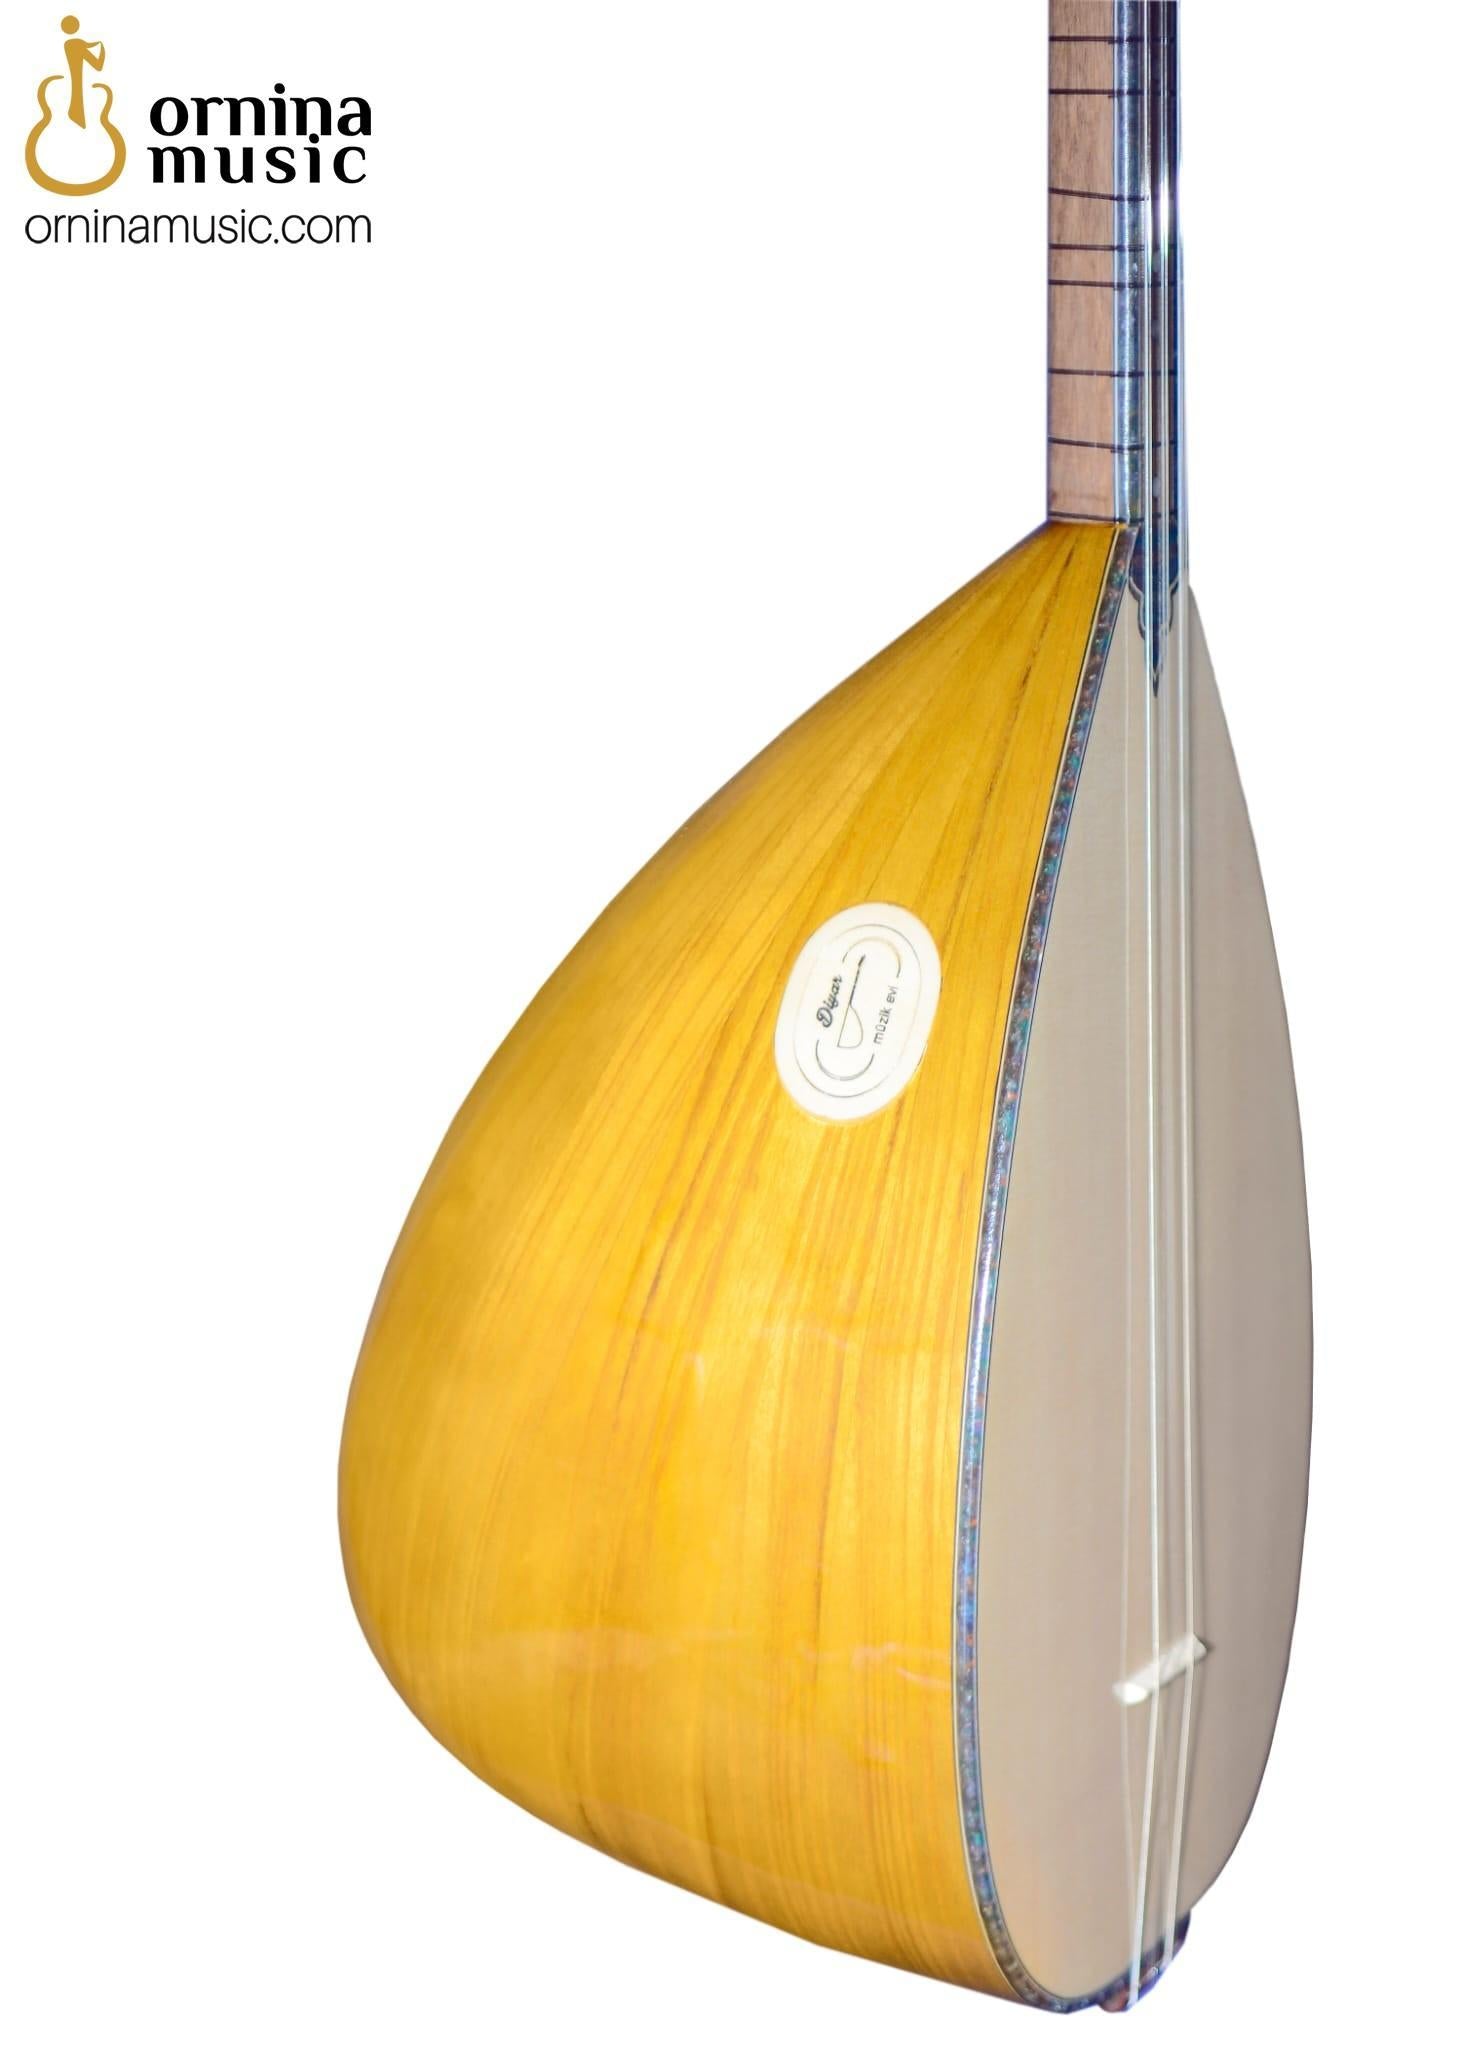 diyar saz baglama long neck saz kaufen ornina music instrument store